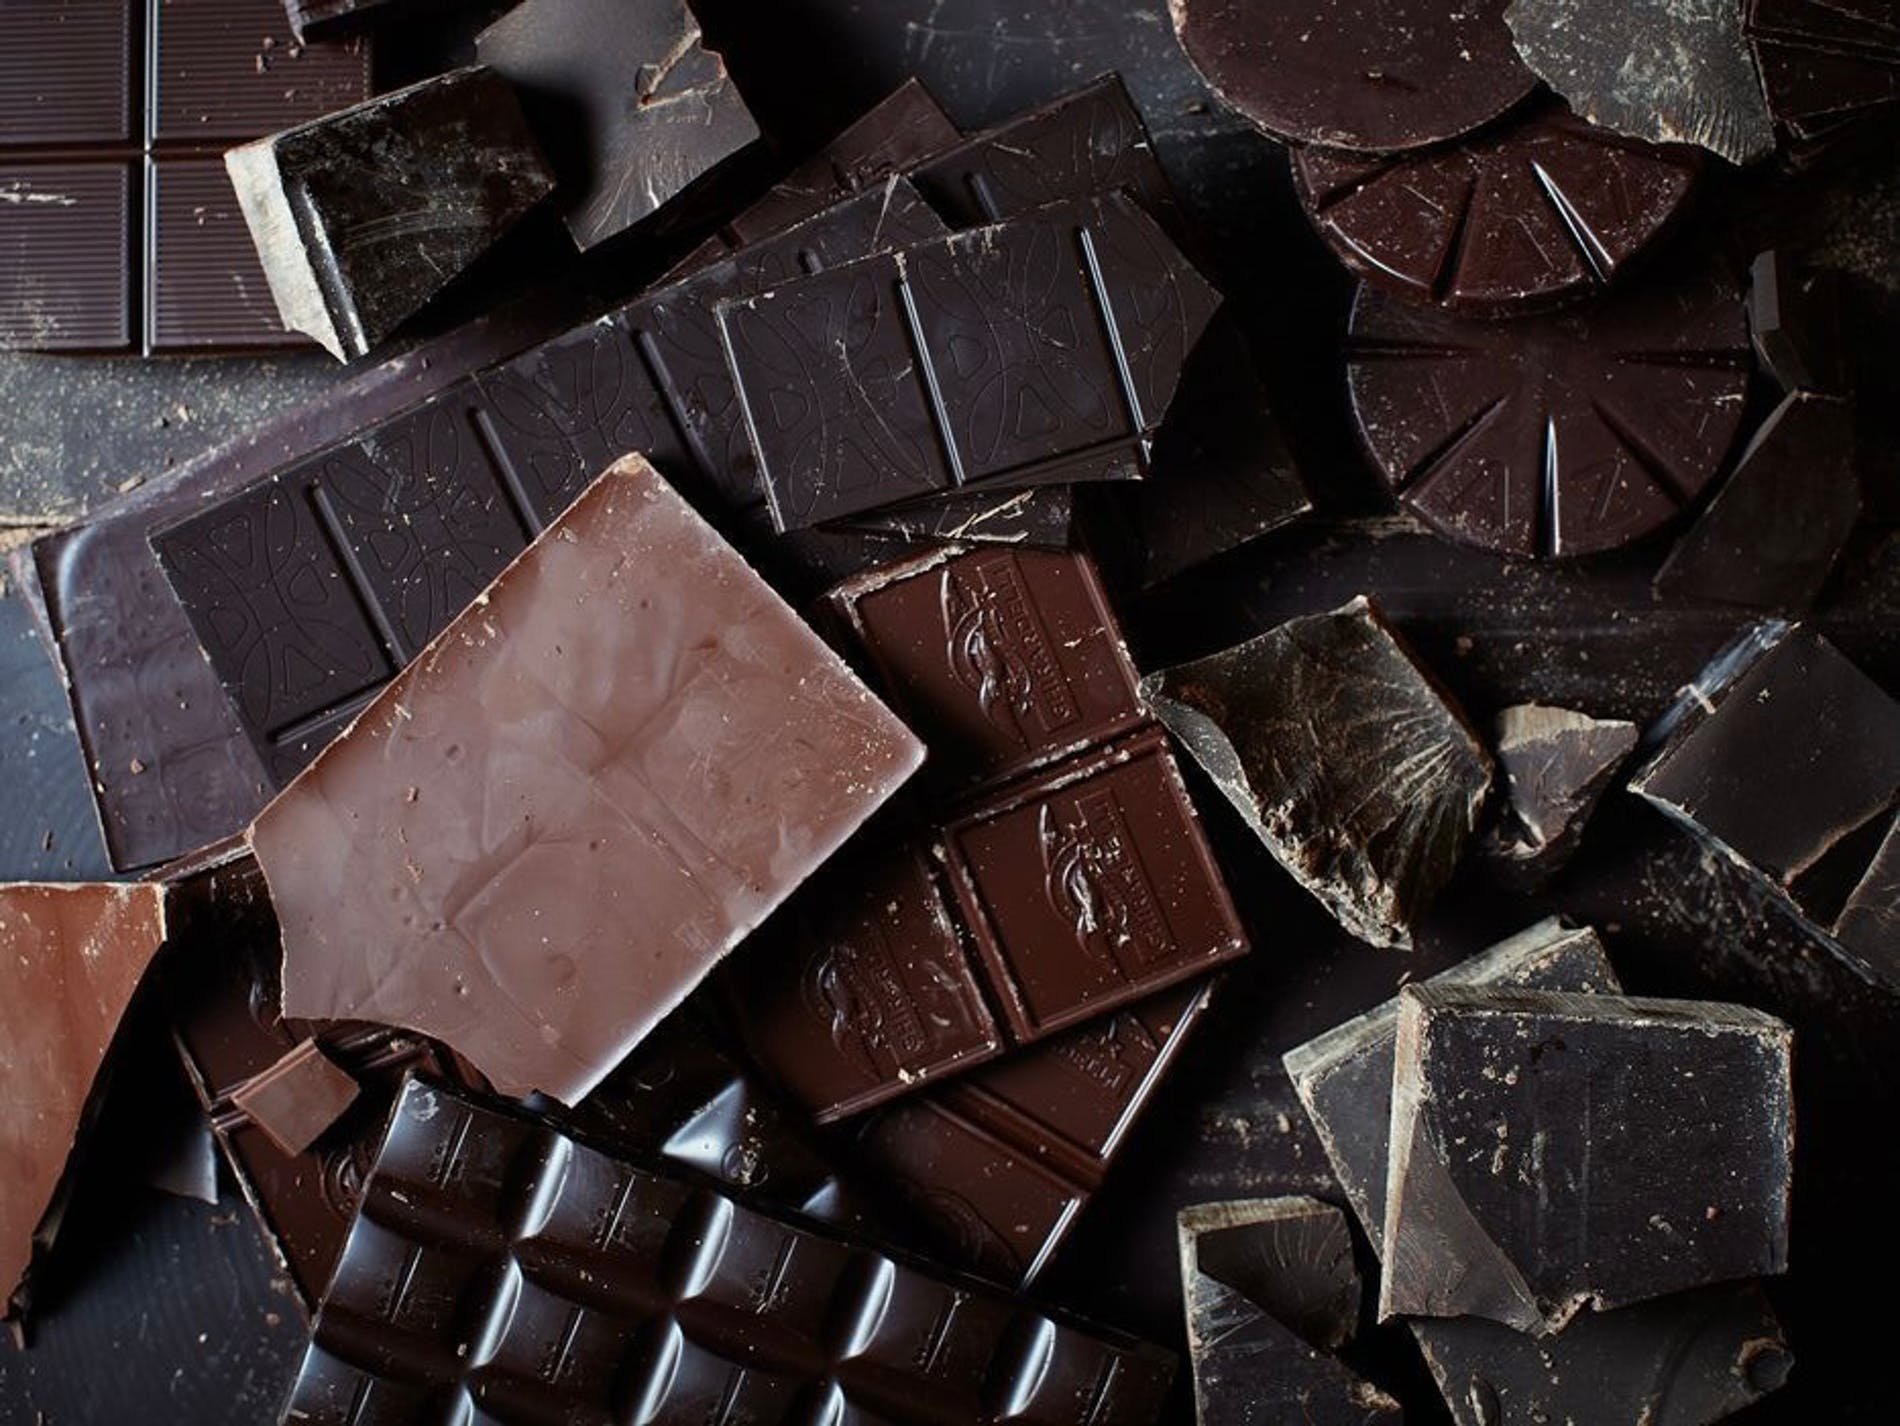 Шоколад п. Шоколад. Плитка шоколада. Темный шоколад. Темный шоколад плитка.